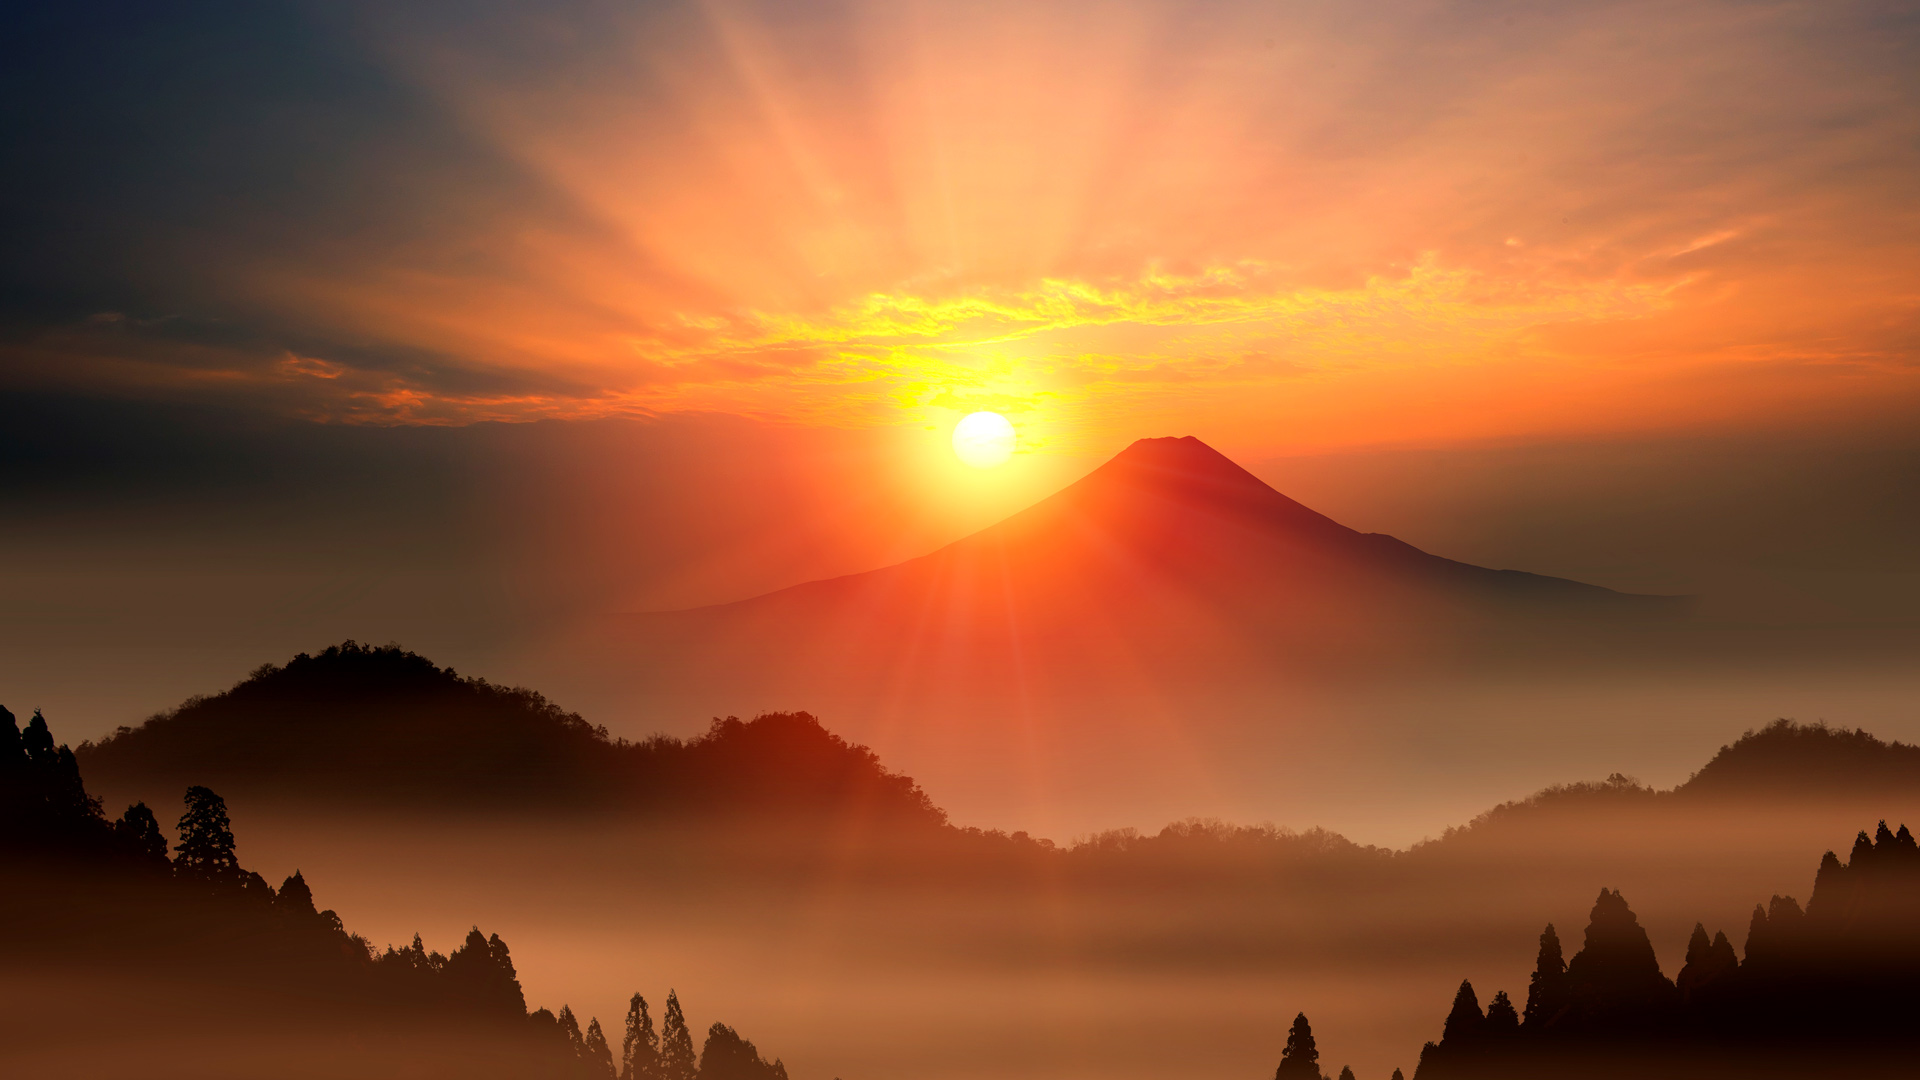 Sunrise at Mt. Fuji, Japan - Peapix